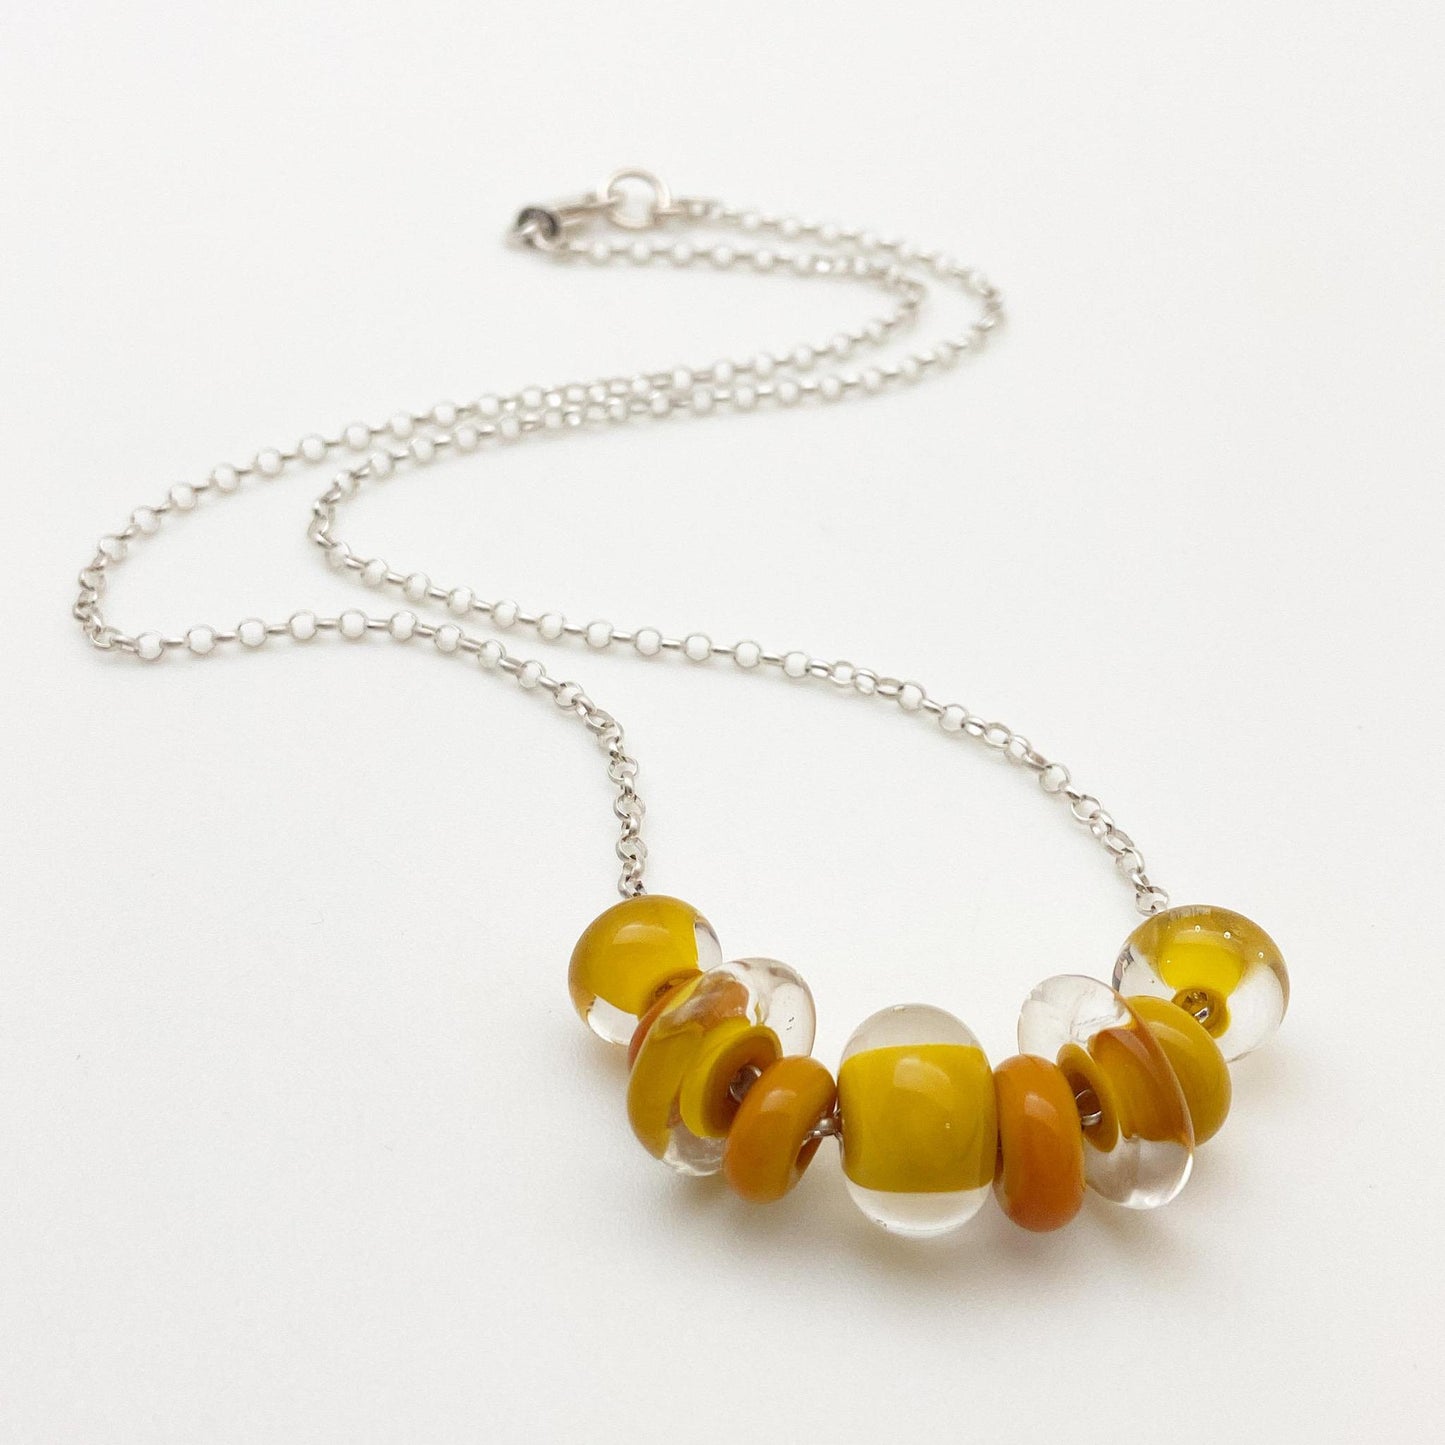 Necklace - Glass "Lifesaver" Beads - Mustard